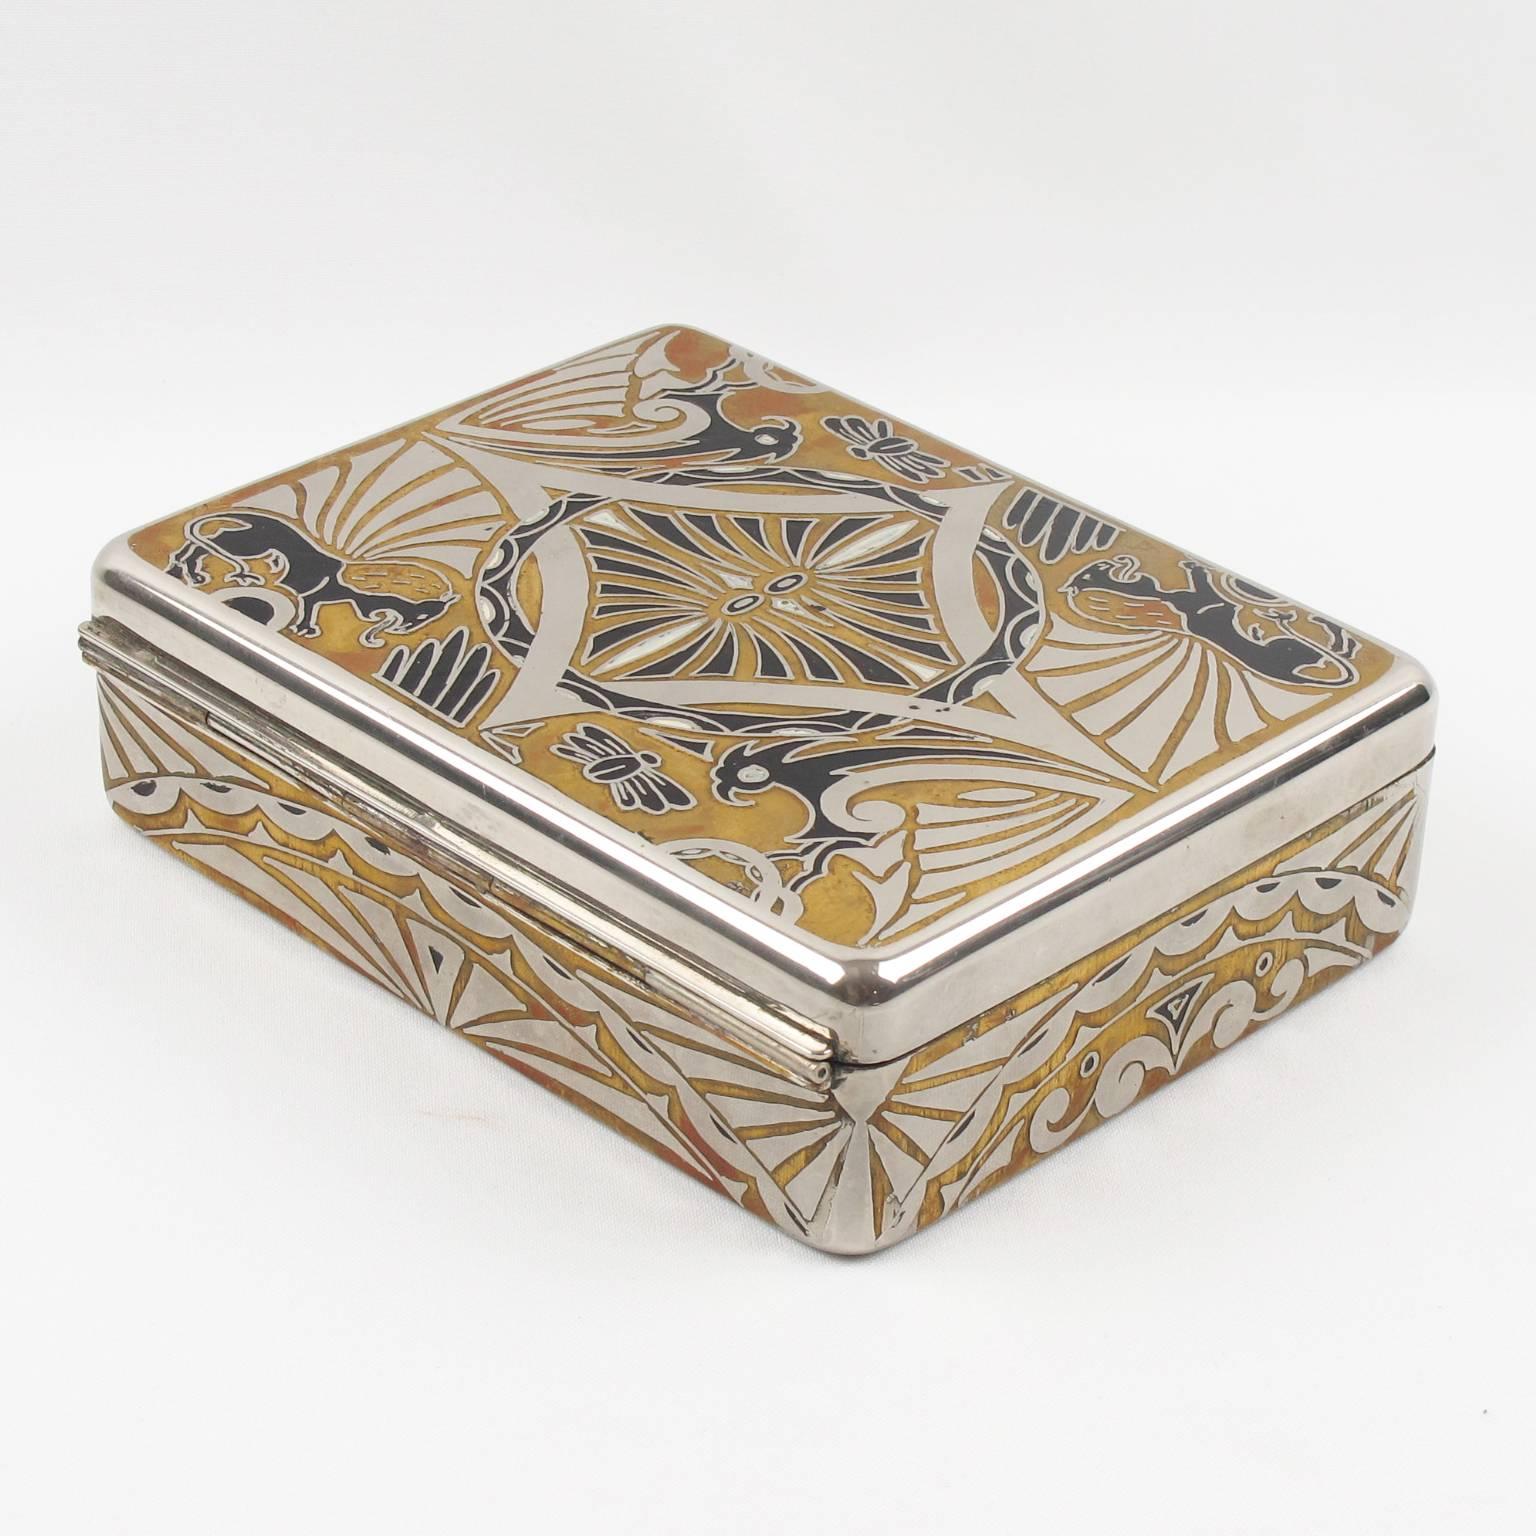 Jugendstil Polished Chrome and Brass Inlaid Decorative Box, Germany, 1910s 1